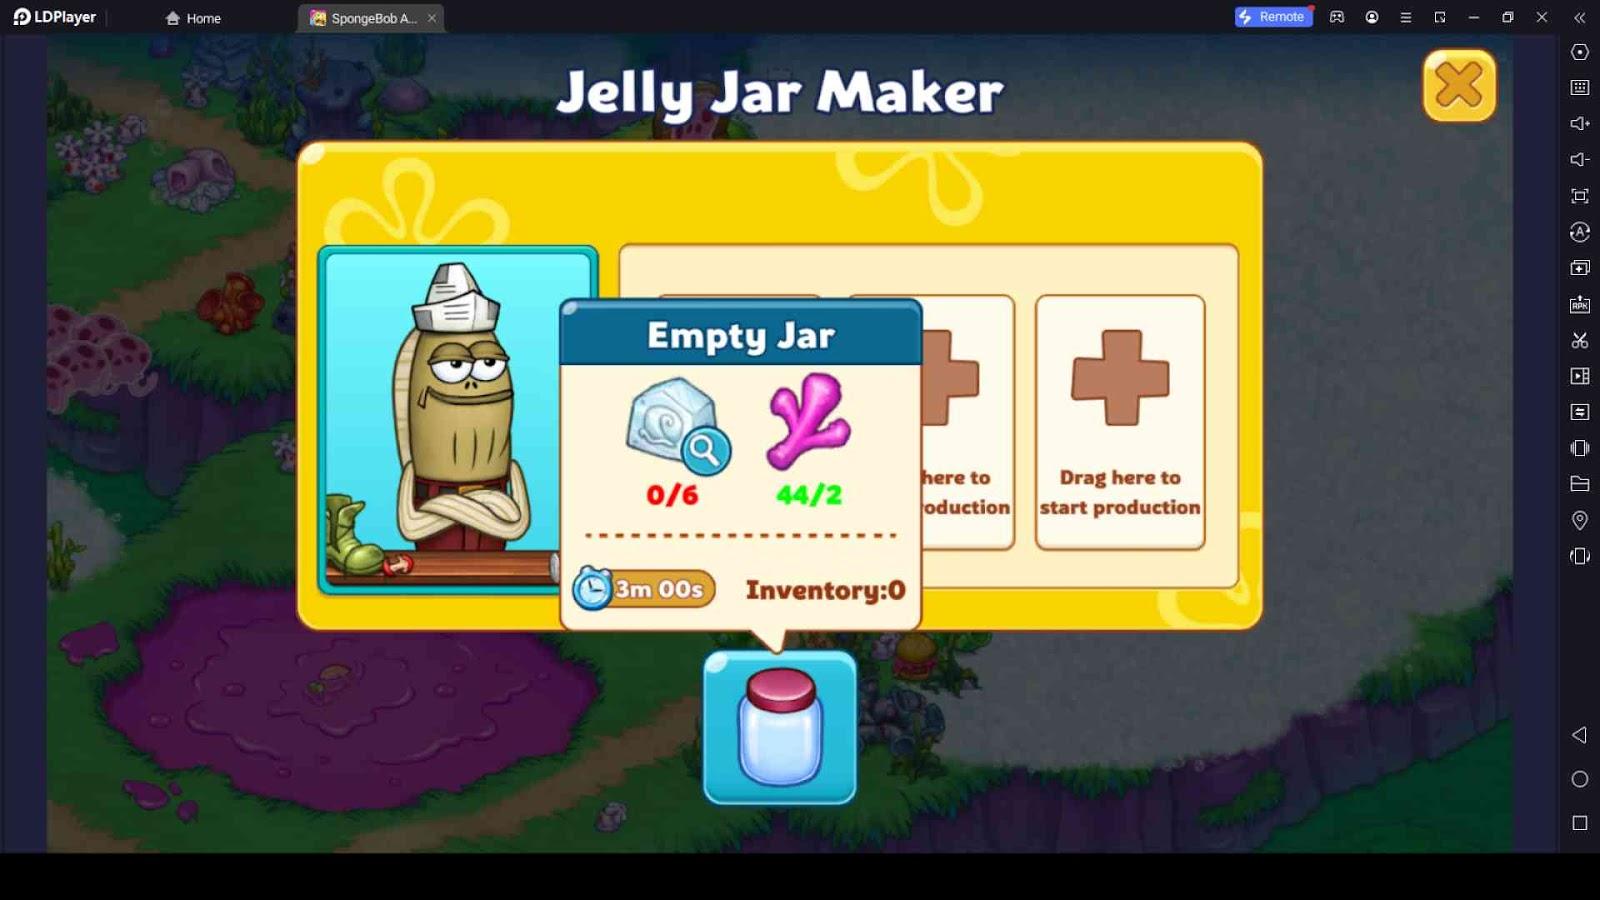 Jelly Jar Maker